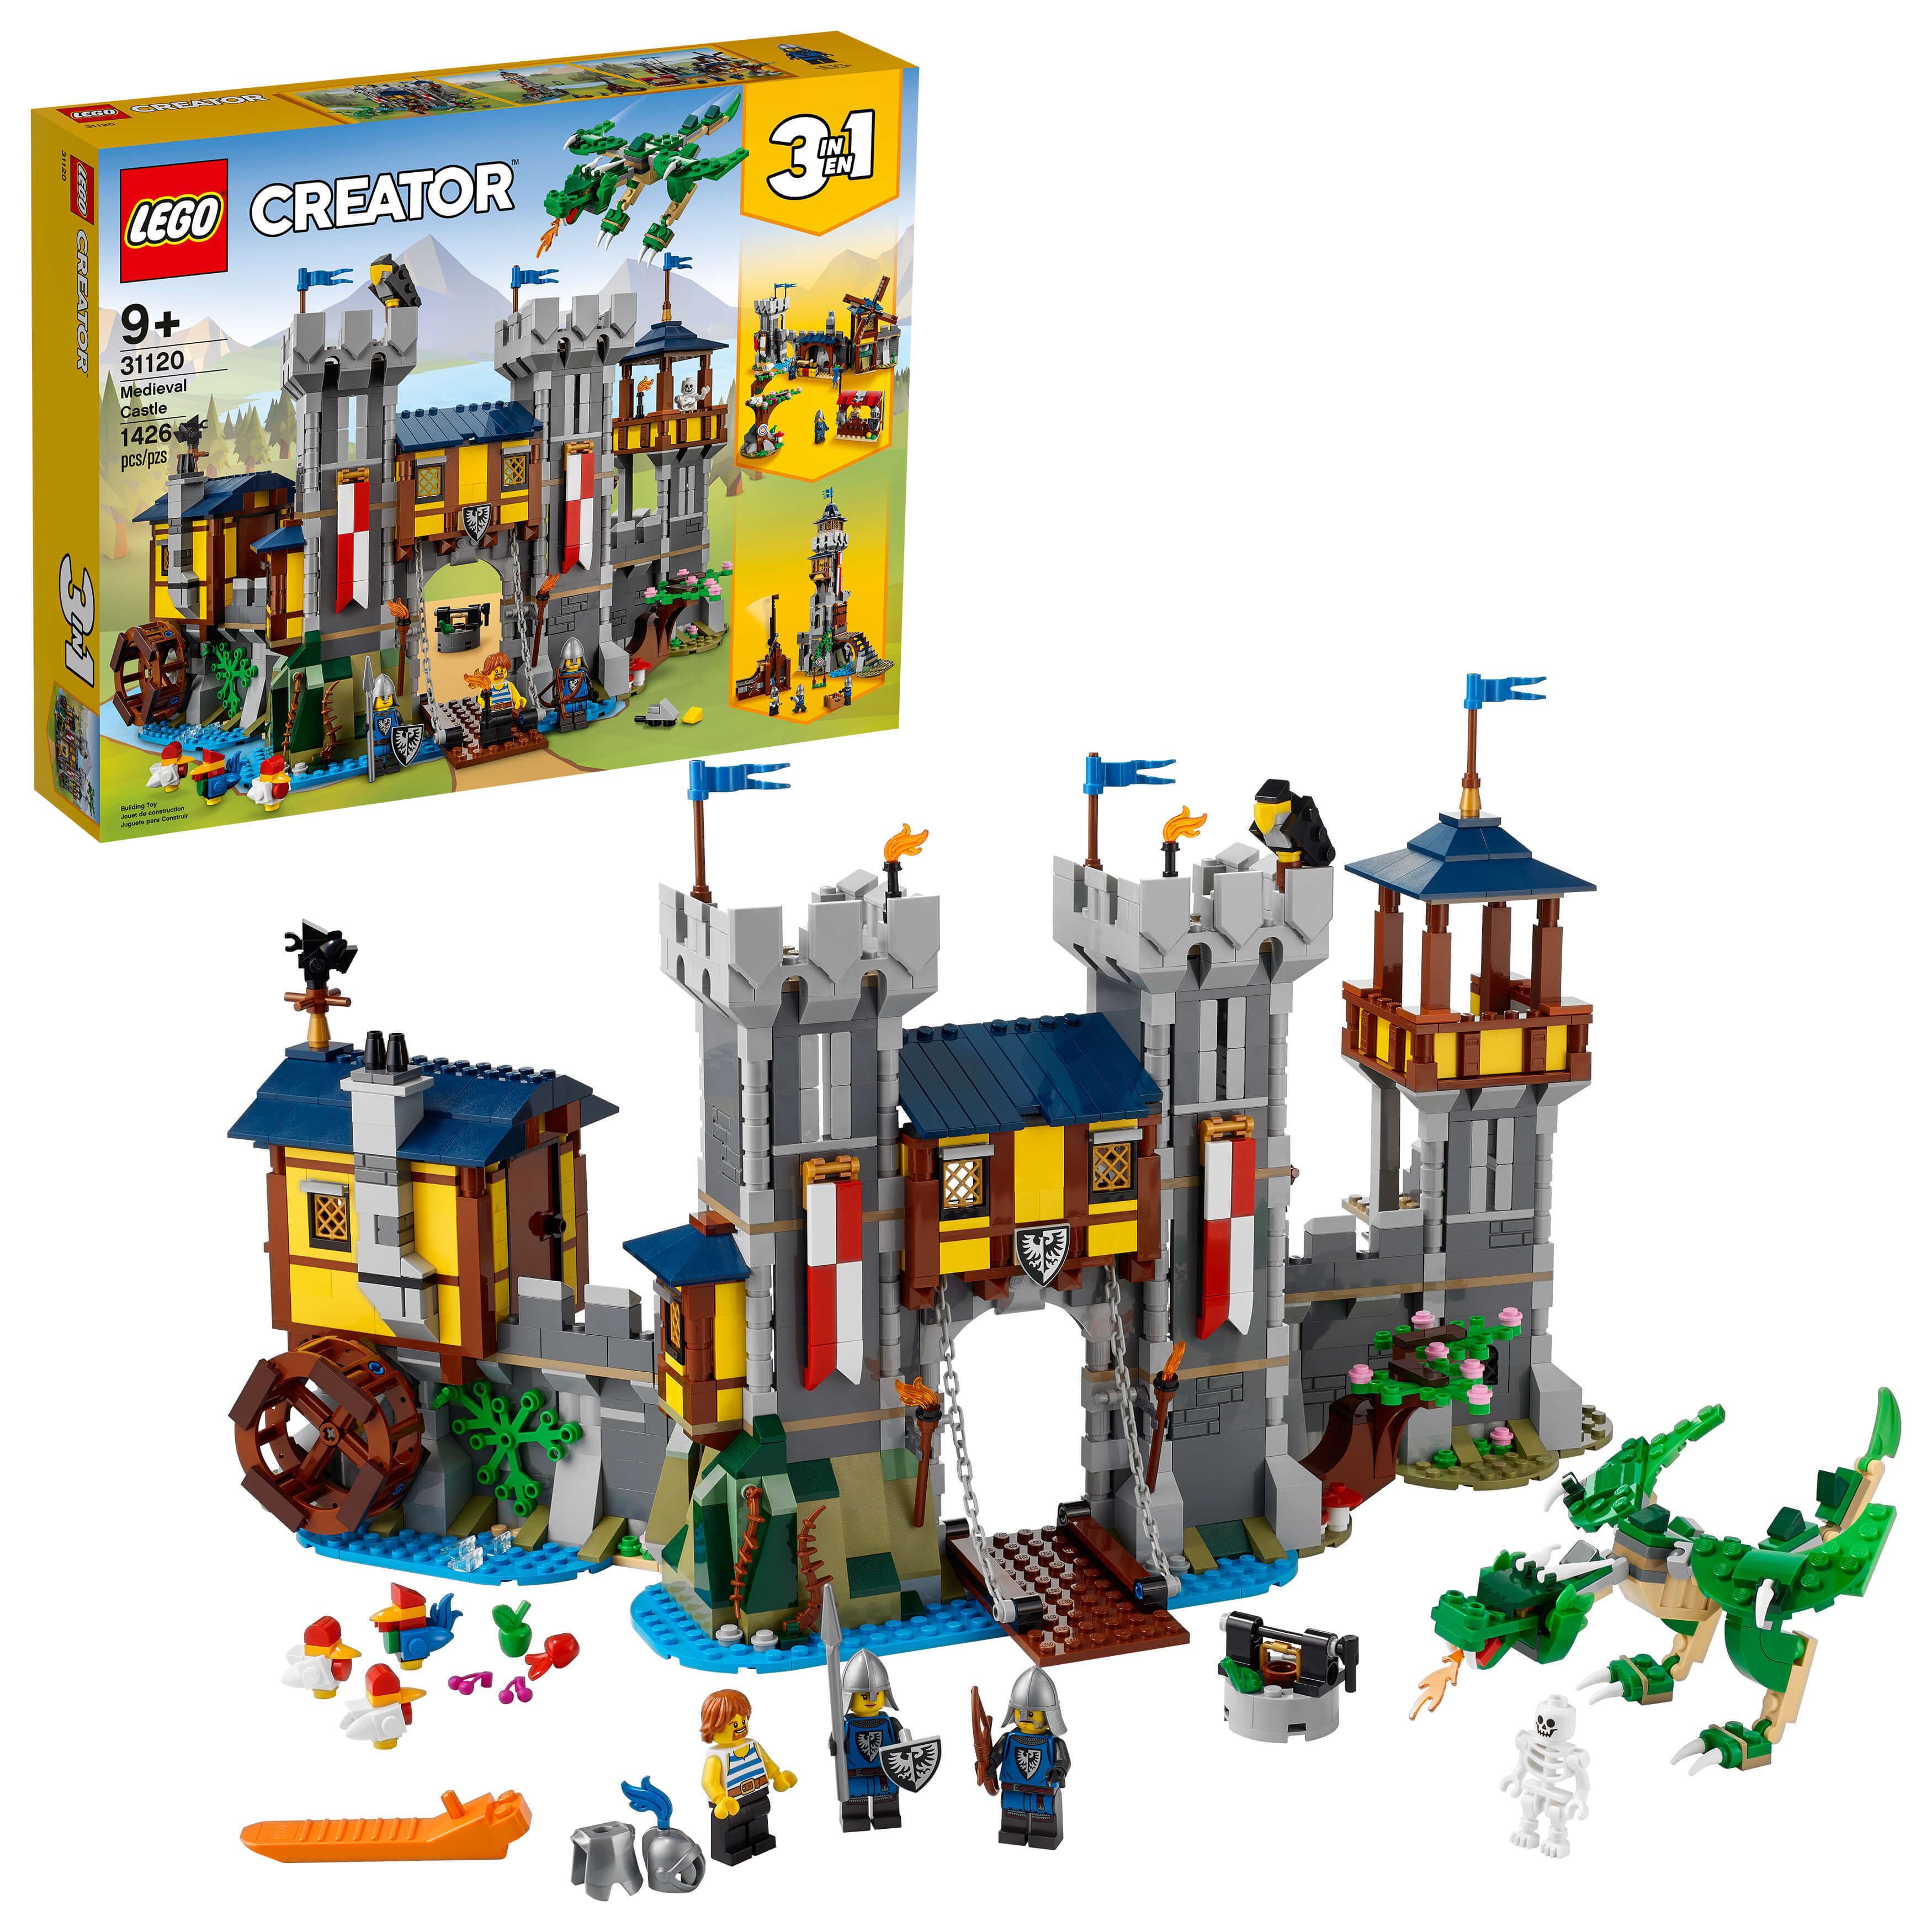 LEGO® Creator 3in1 Medieval Castle 31120 Building Kit (1,426 Pieces)